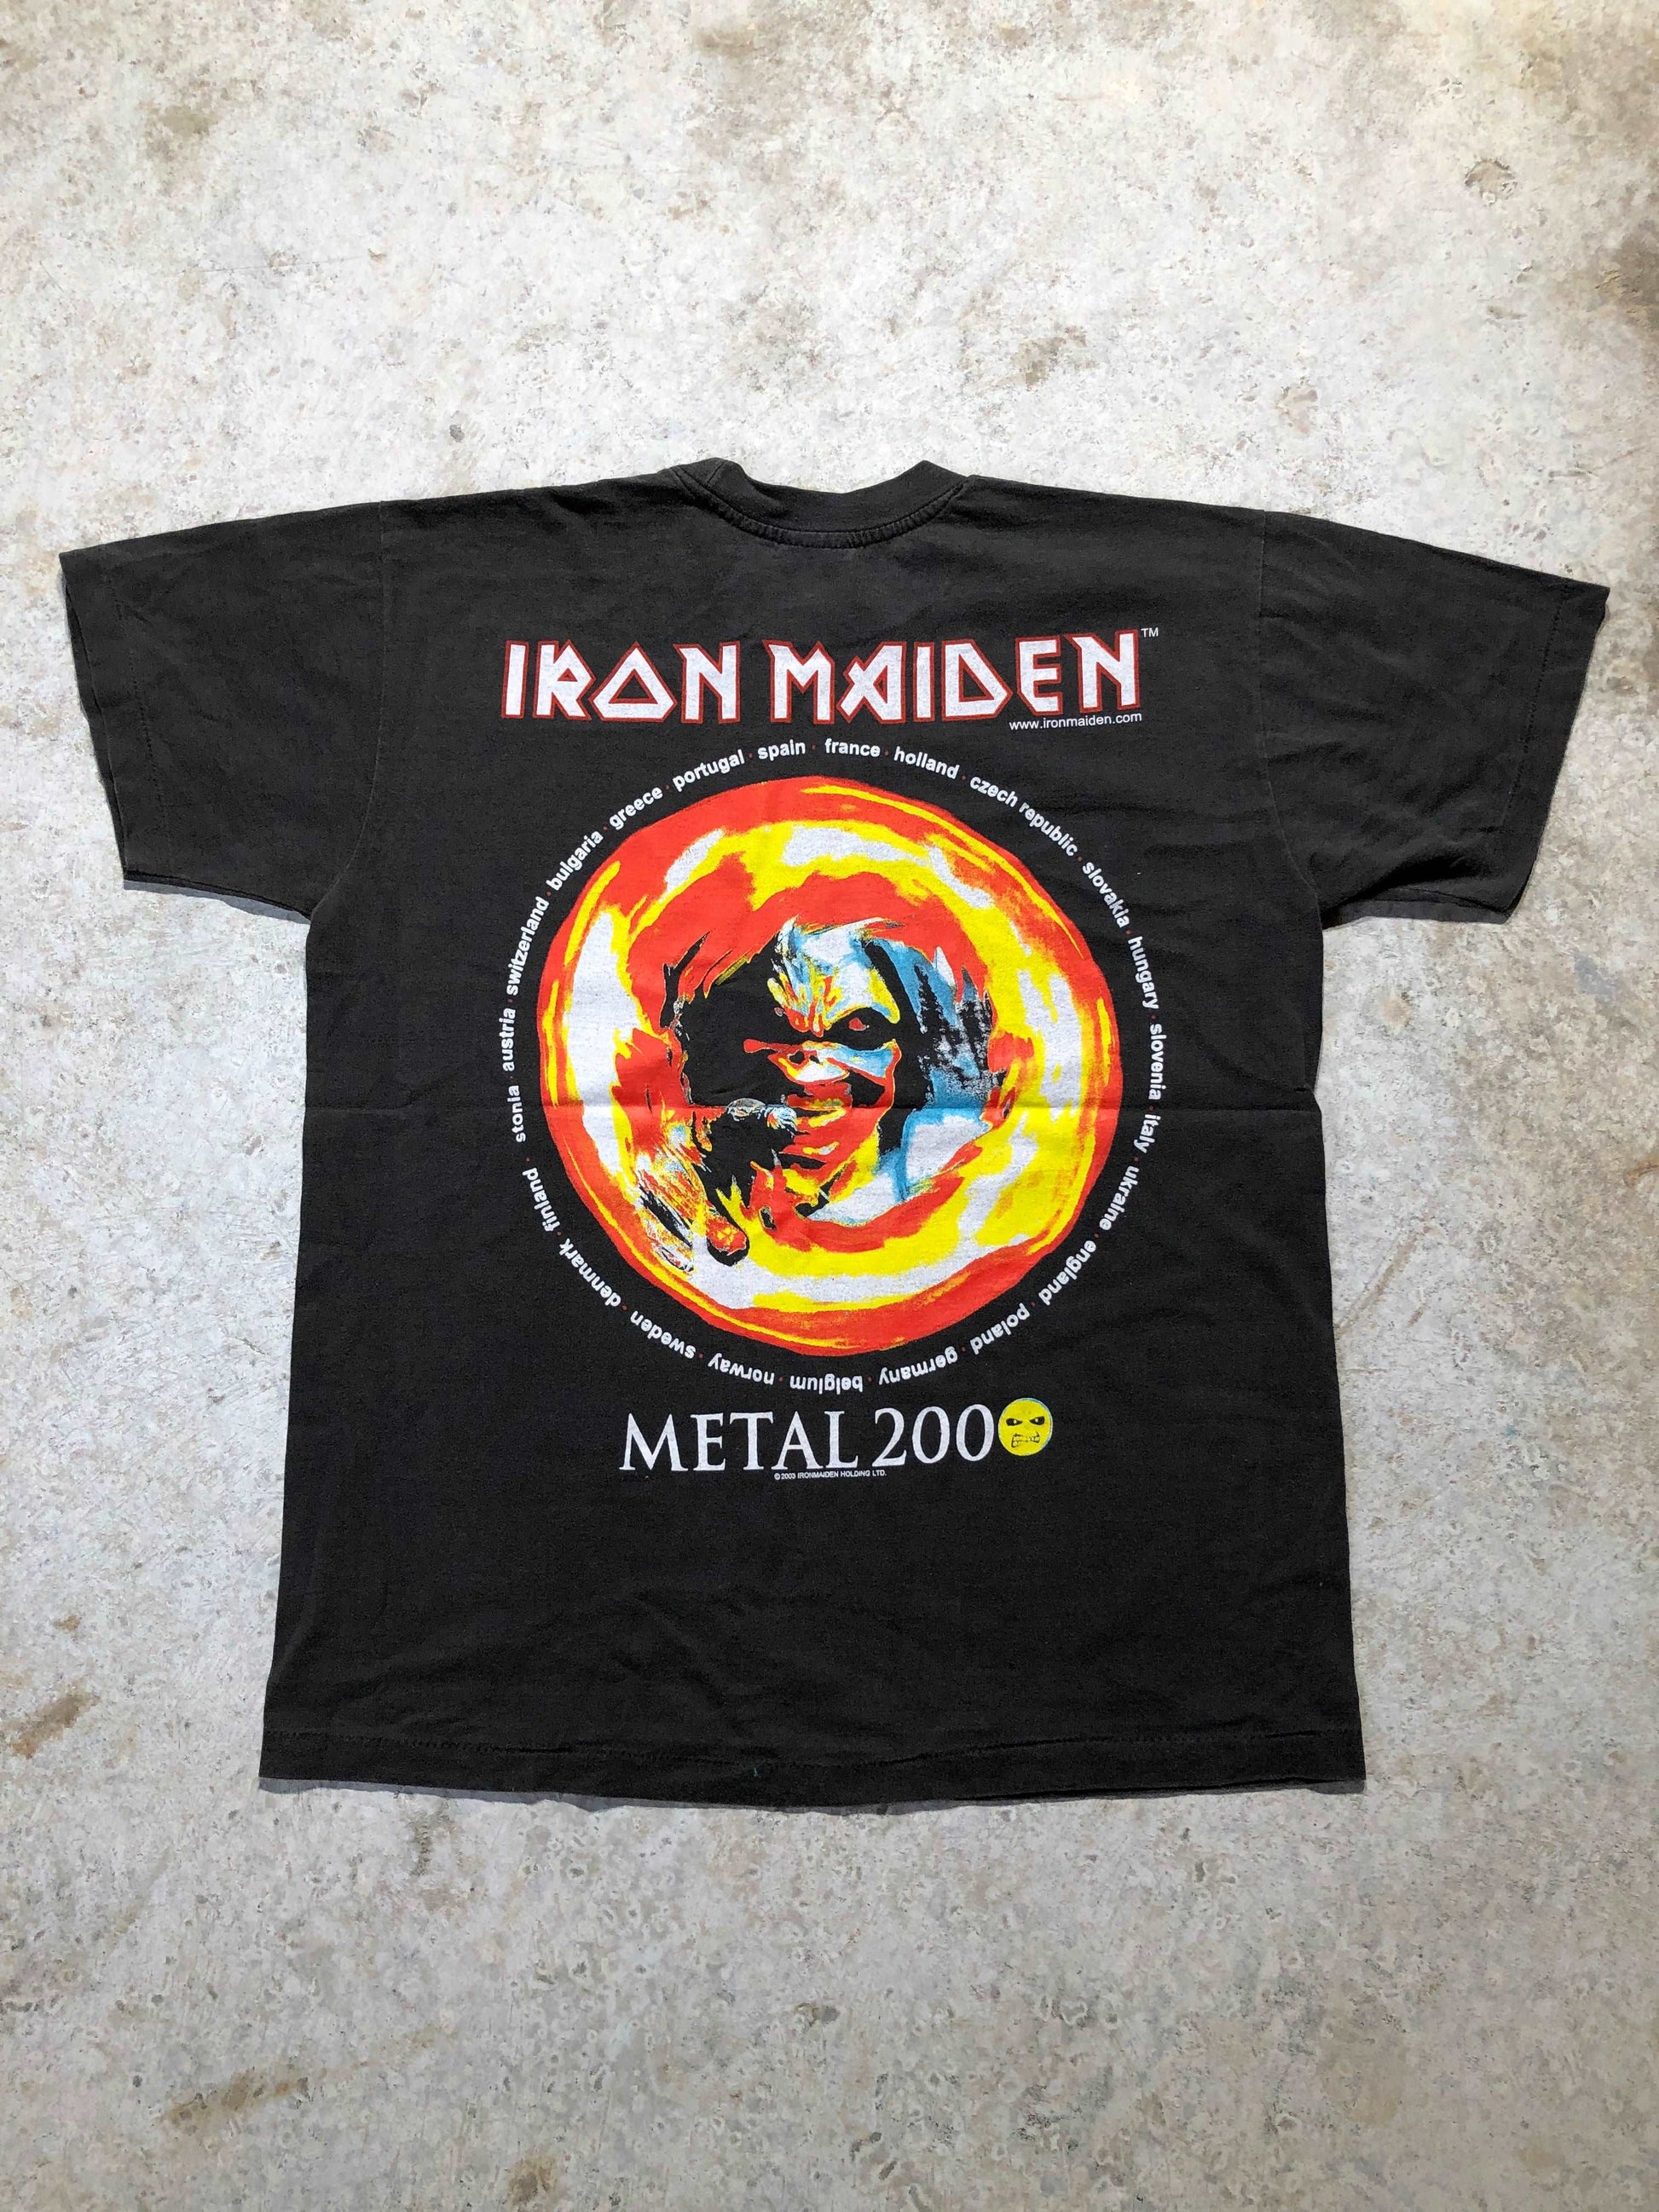 2003 Iron Maiden Metal Tour Tee (Large), Tee - Vintage64.com